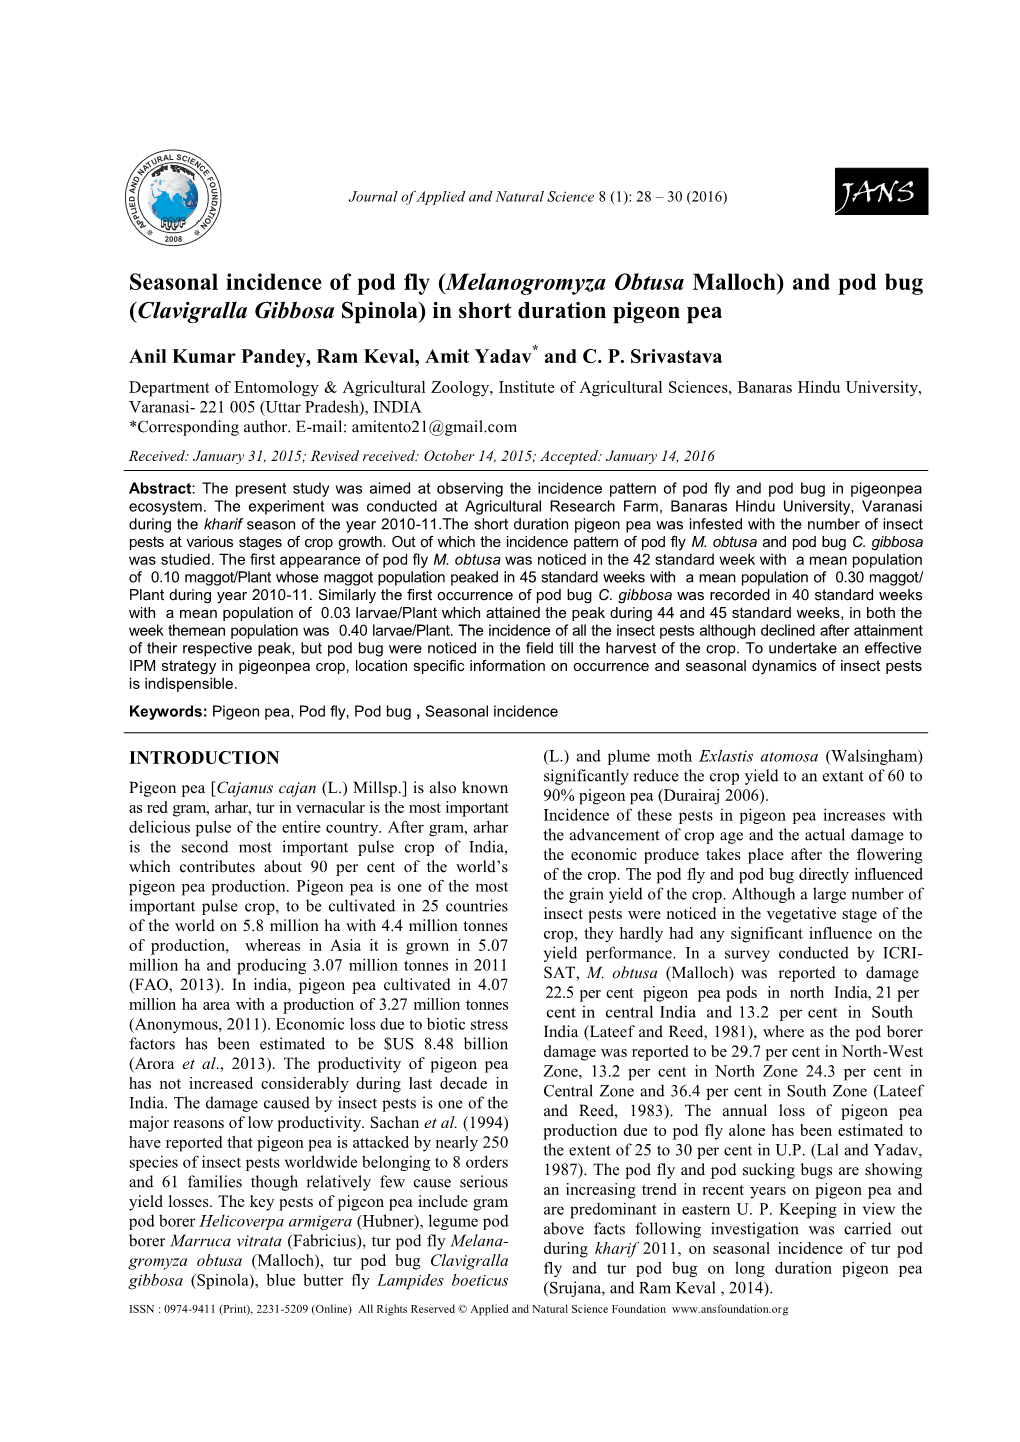 Seasonal Incidence of Pod Fly (Melanogromyza Obtusa Malloch) and Pod Bug (Clavigralla Gibbosa Spinola) in Short Duration Pigeon Pea